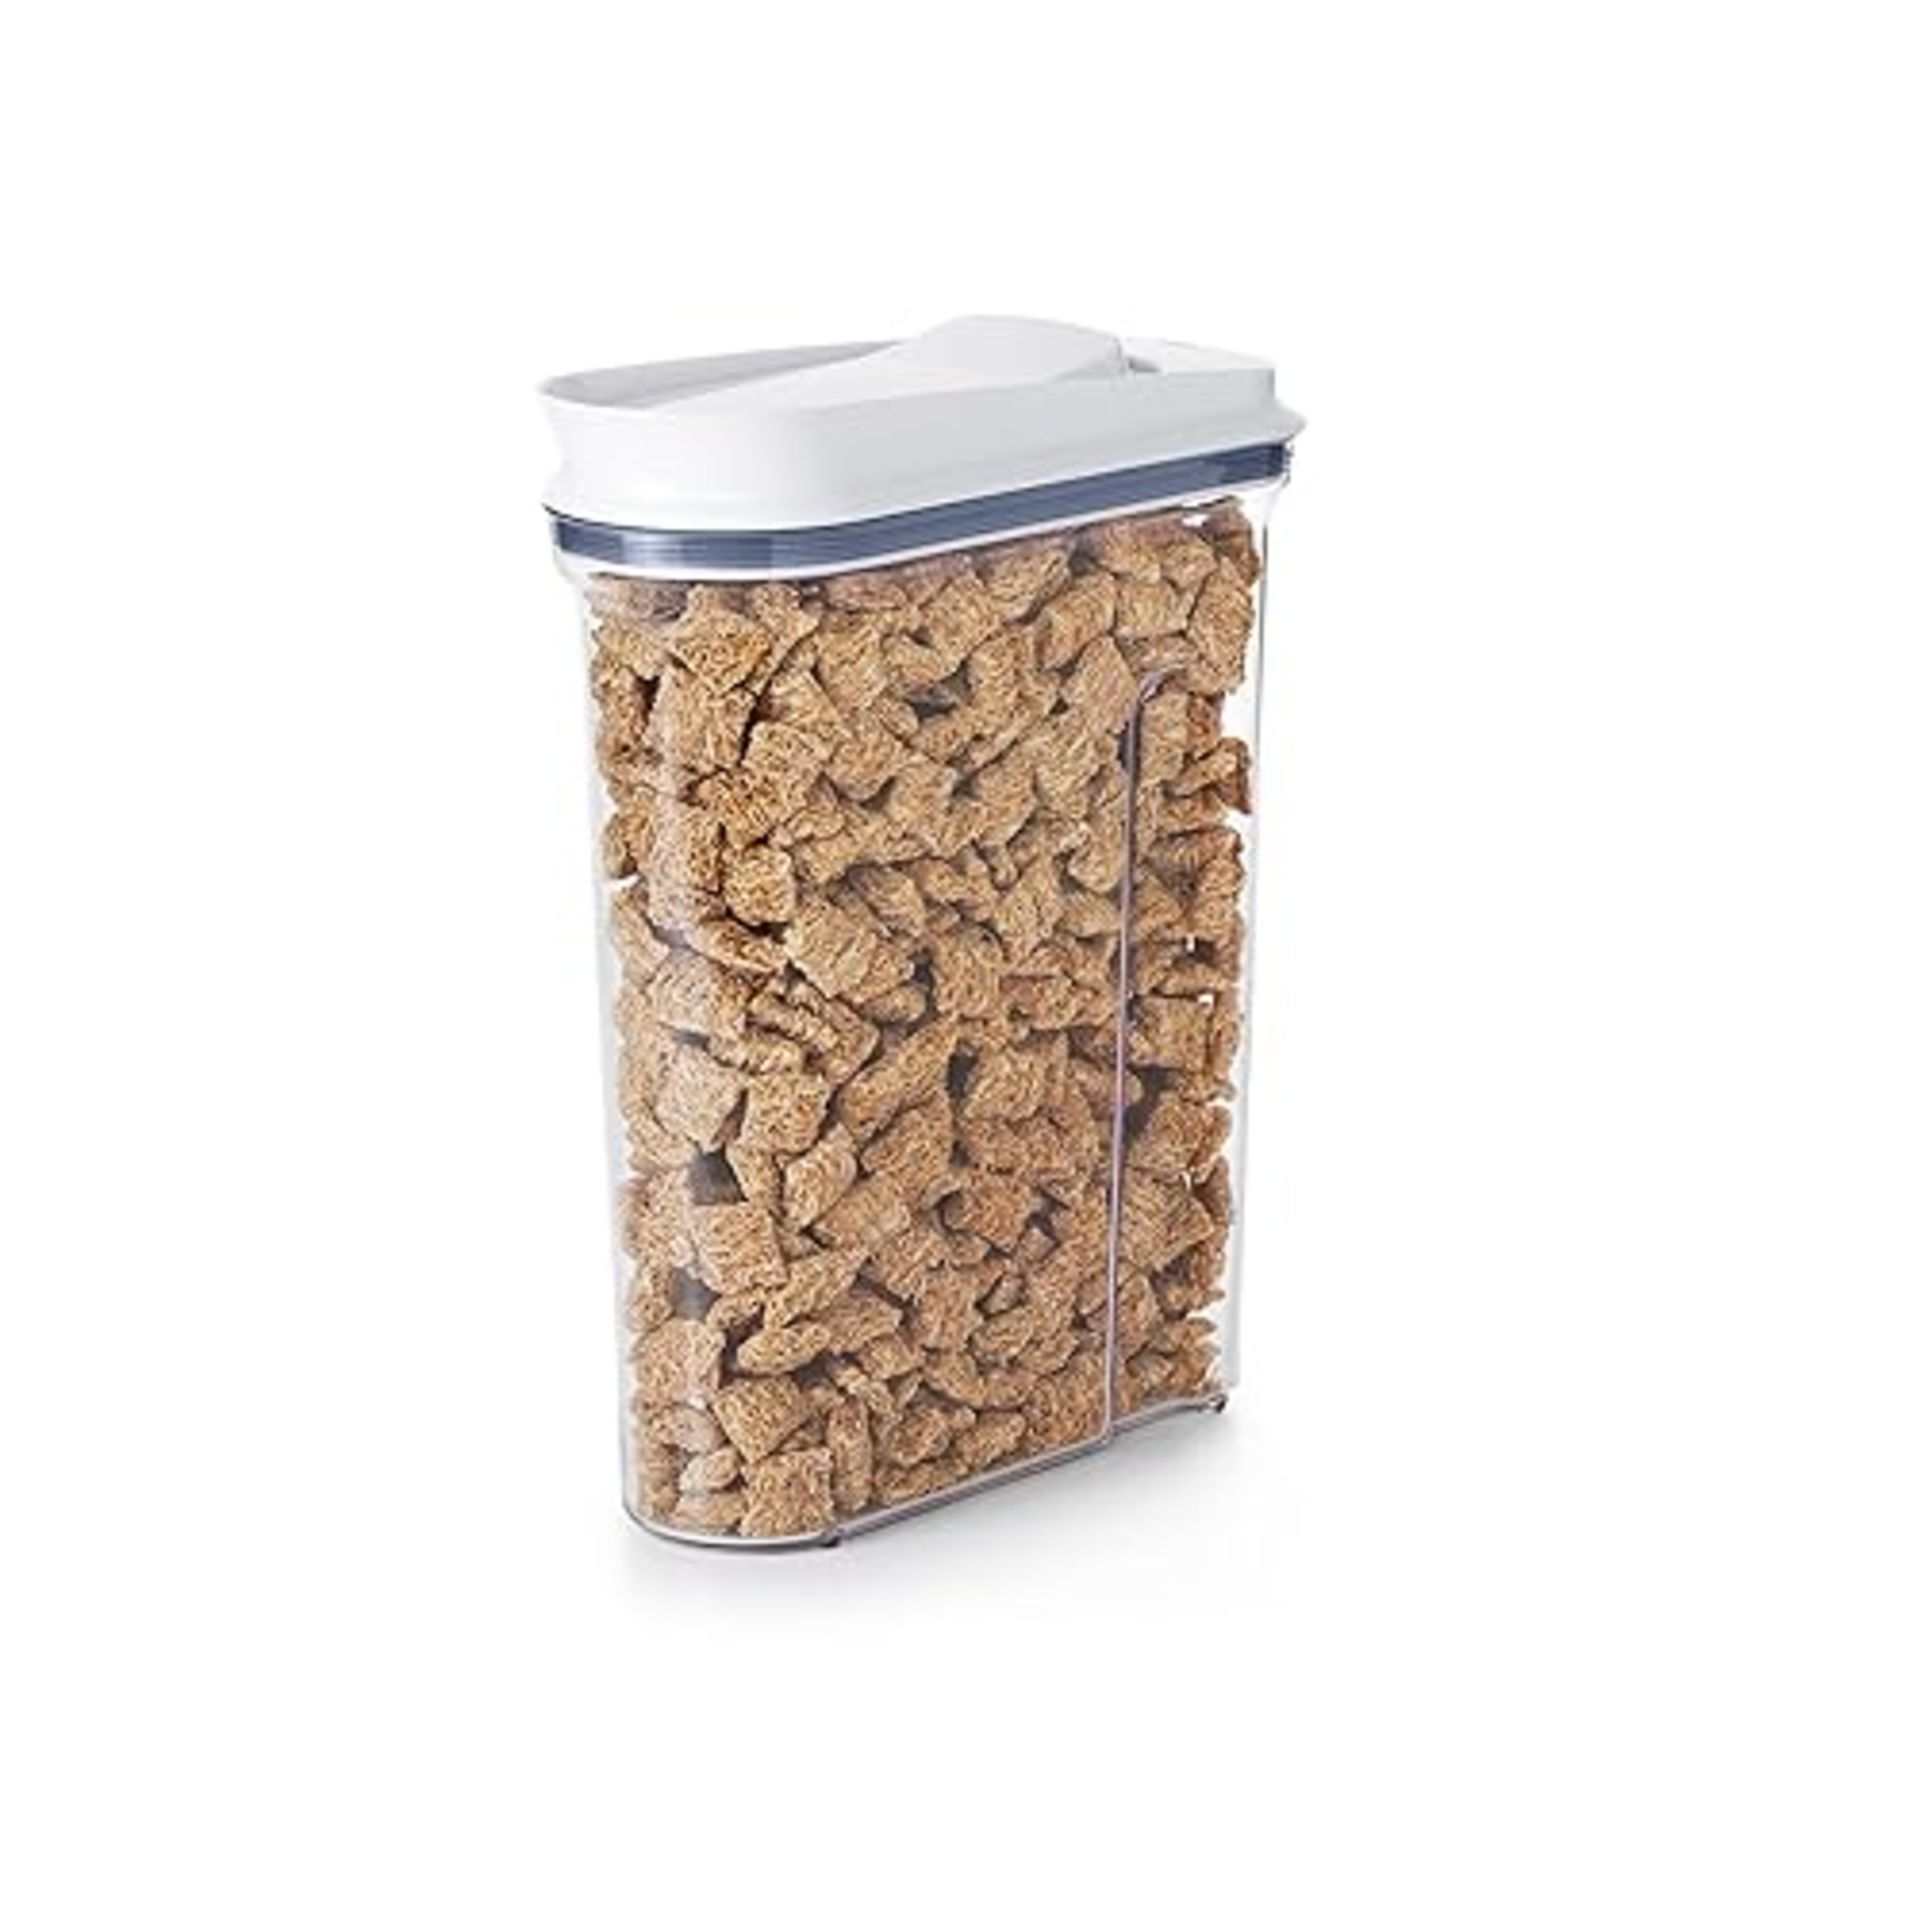 OXO Good Grips Pop Large Cereal Dispenser, Grey, Clear - 4.2 Litre